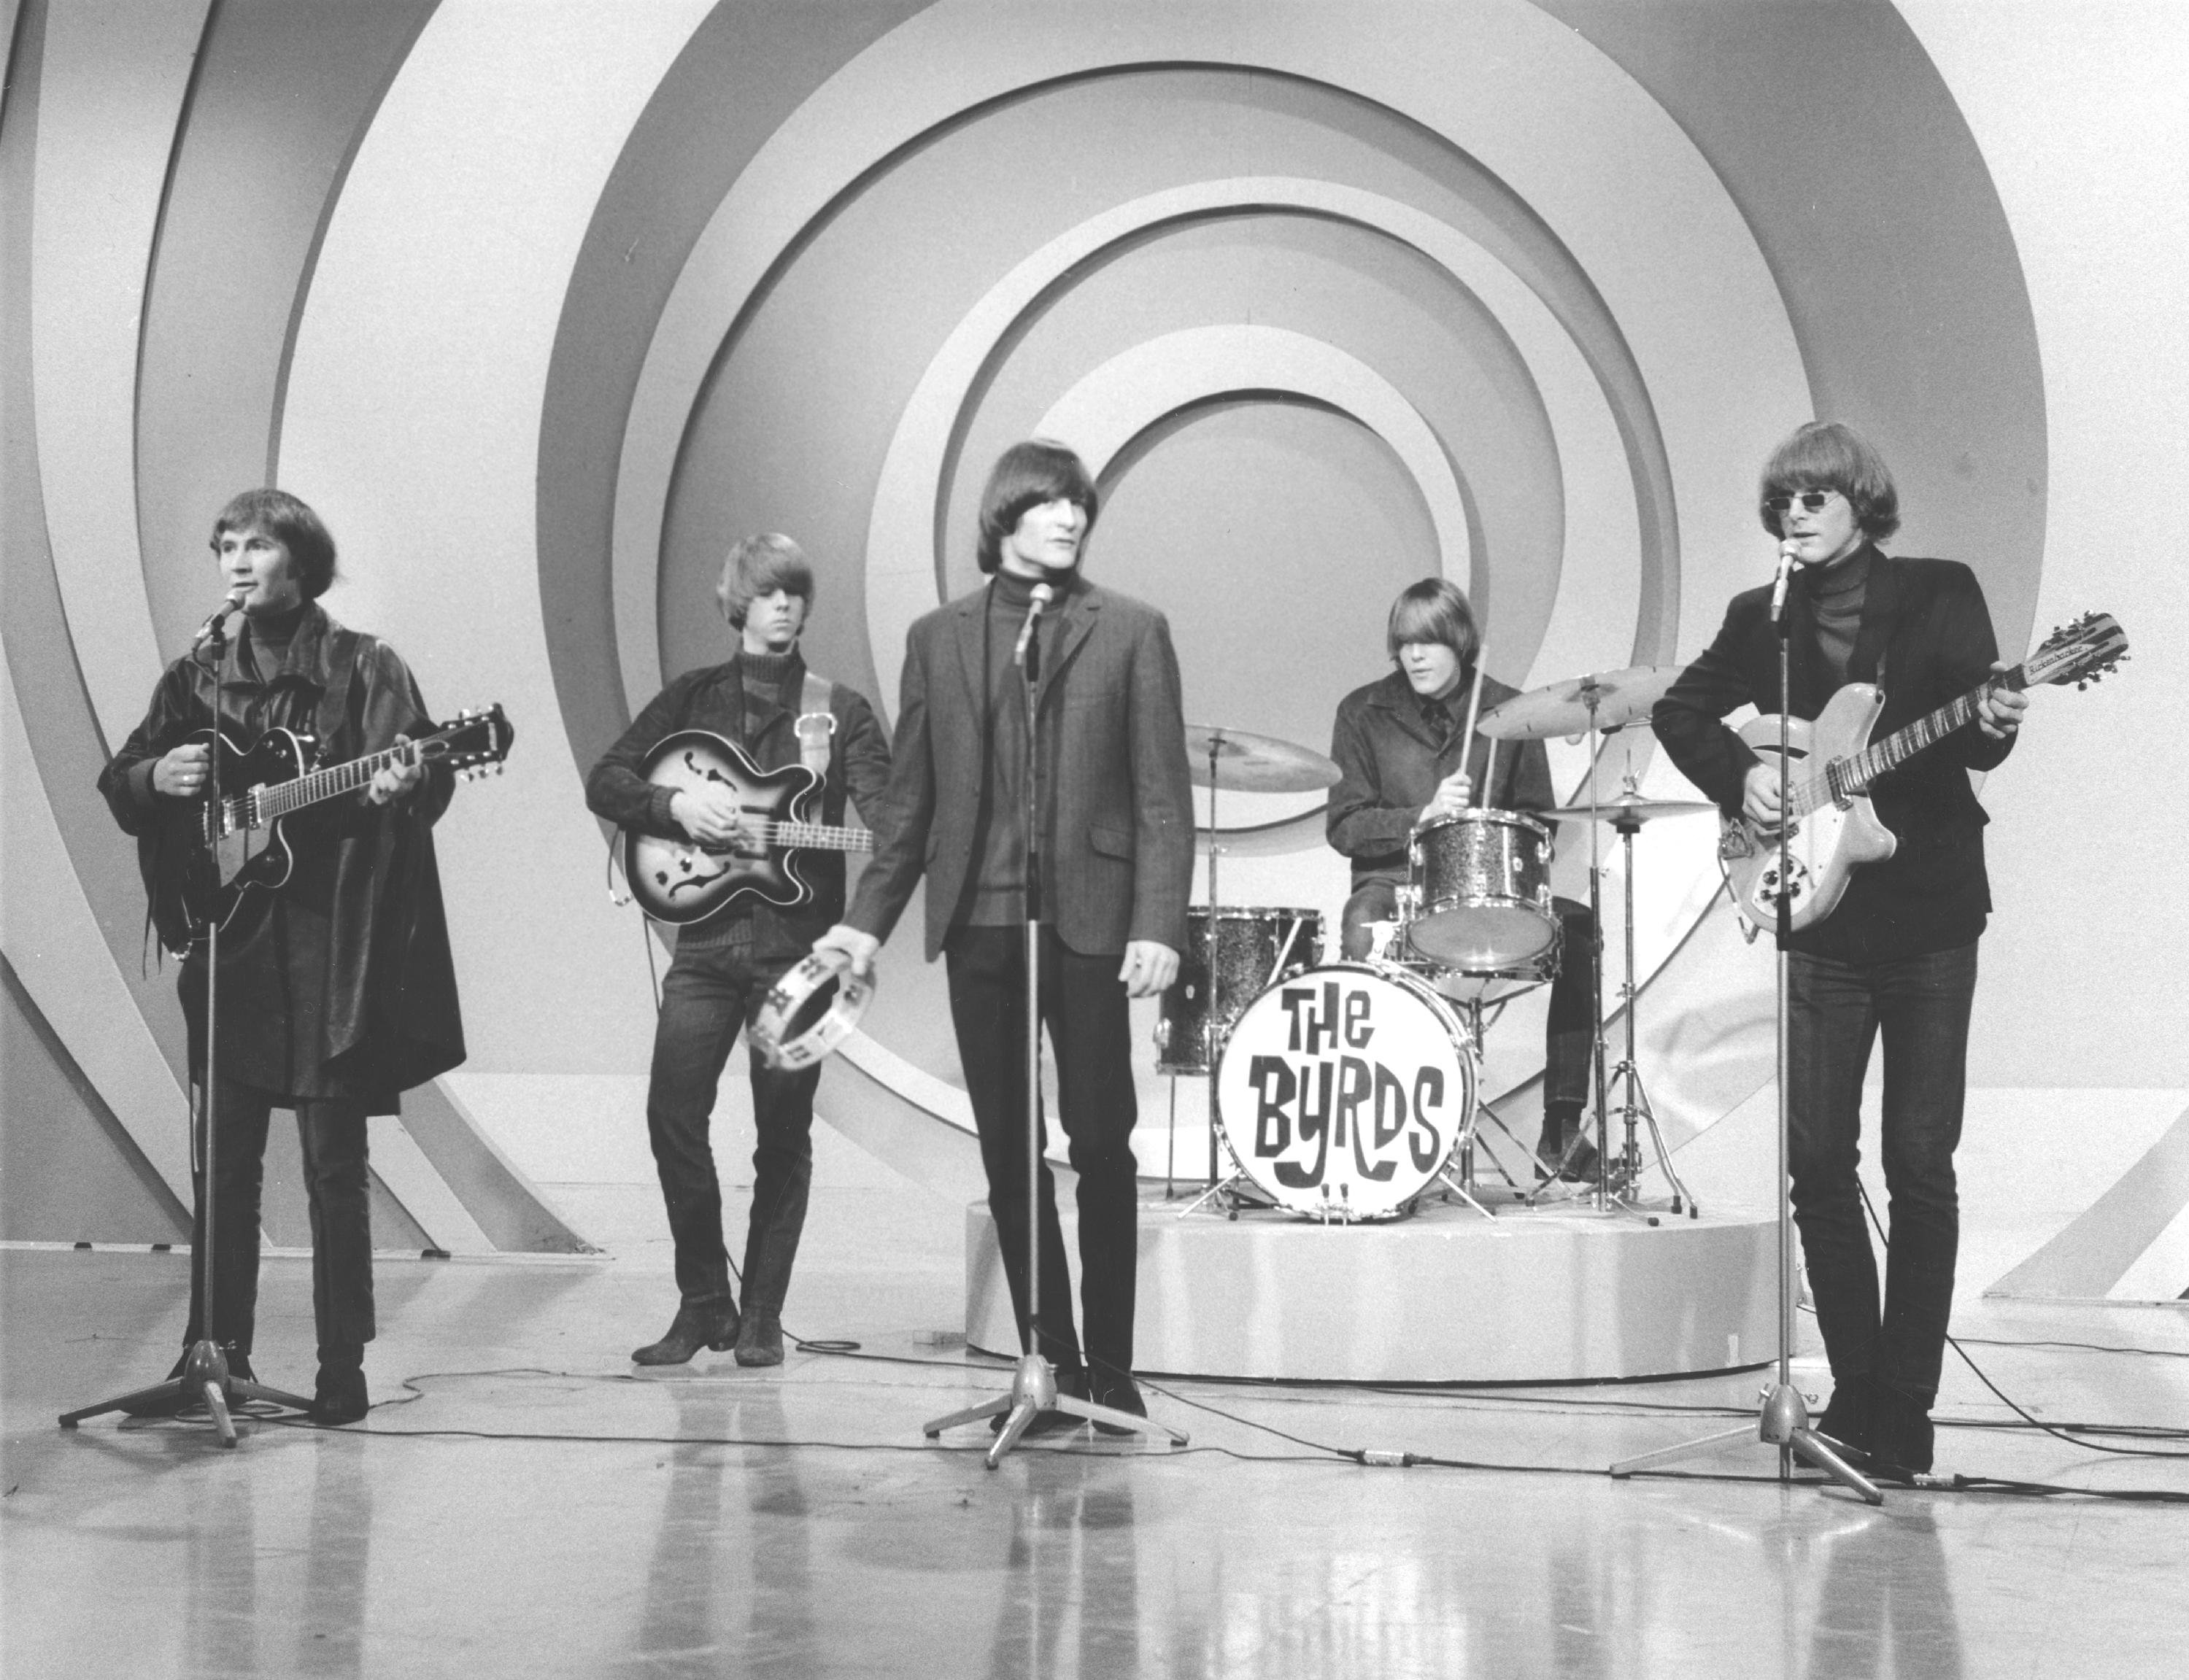 The Byrds (David Crosby, Chris Hillman, Gene Clark, Michael Clarke, and Jim McGuinn) perform 'Turn Turn Turn' on The Ed Sullivan Show